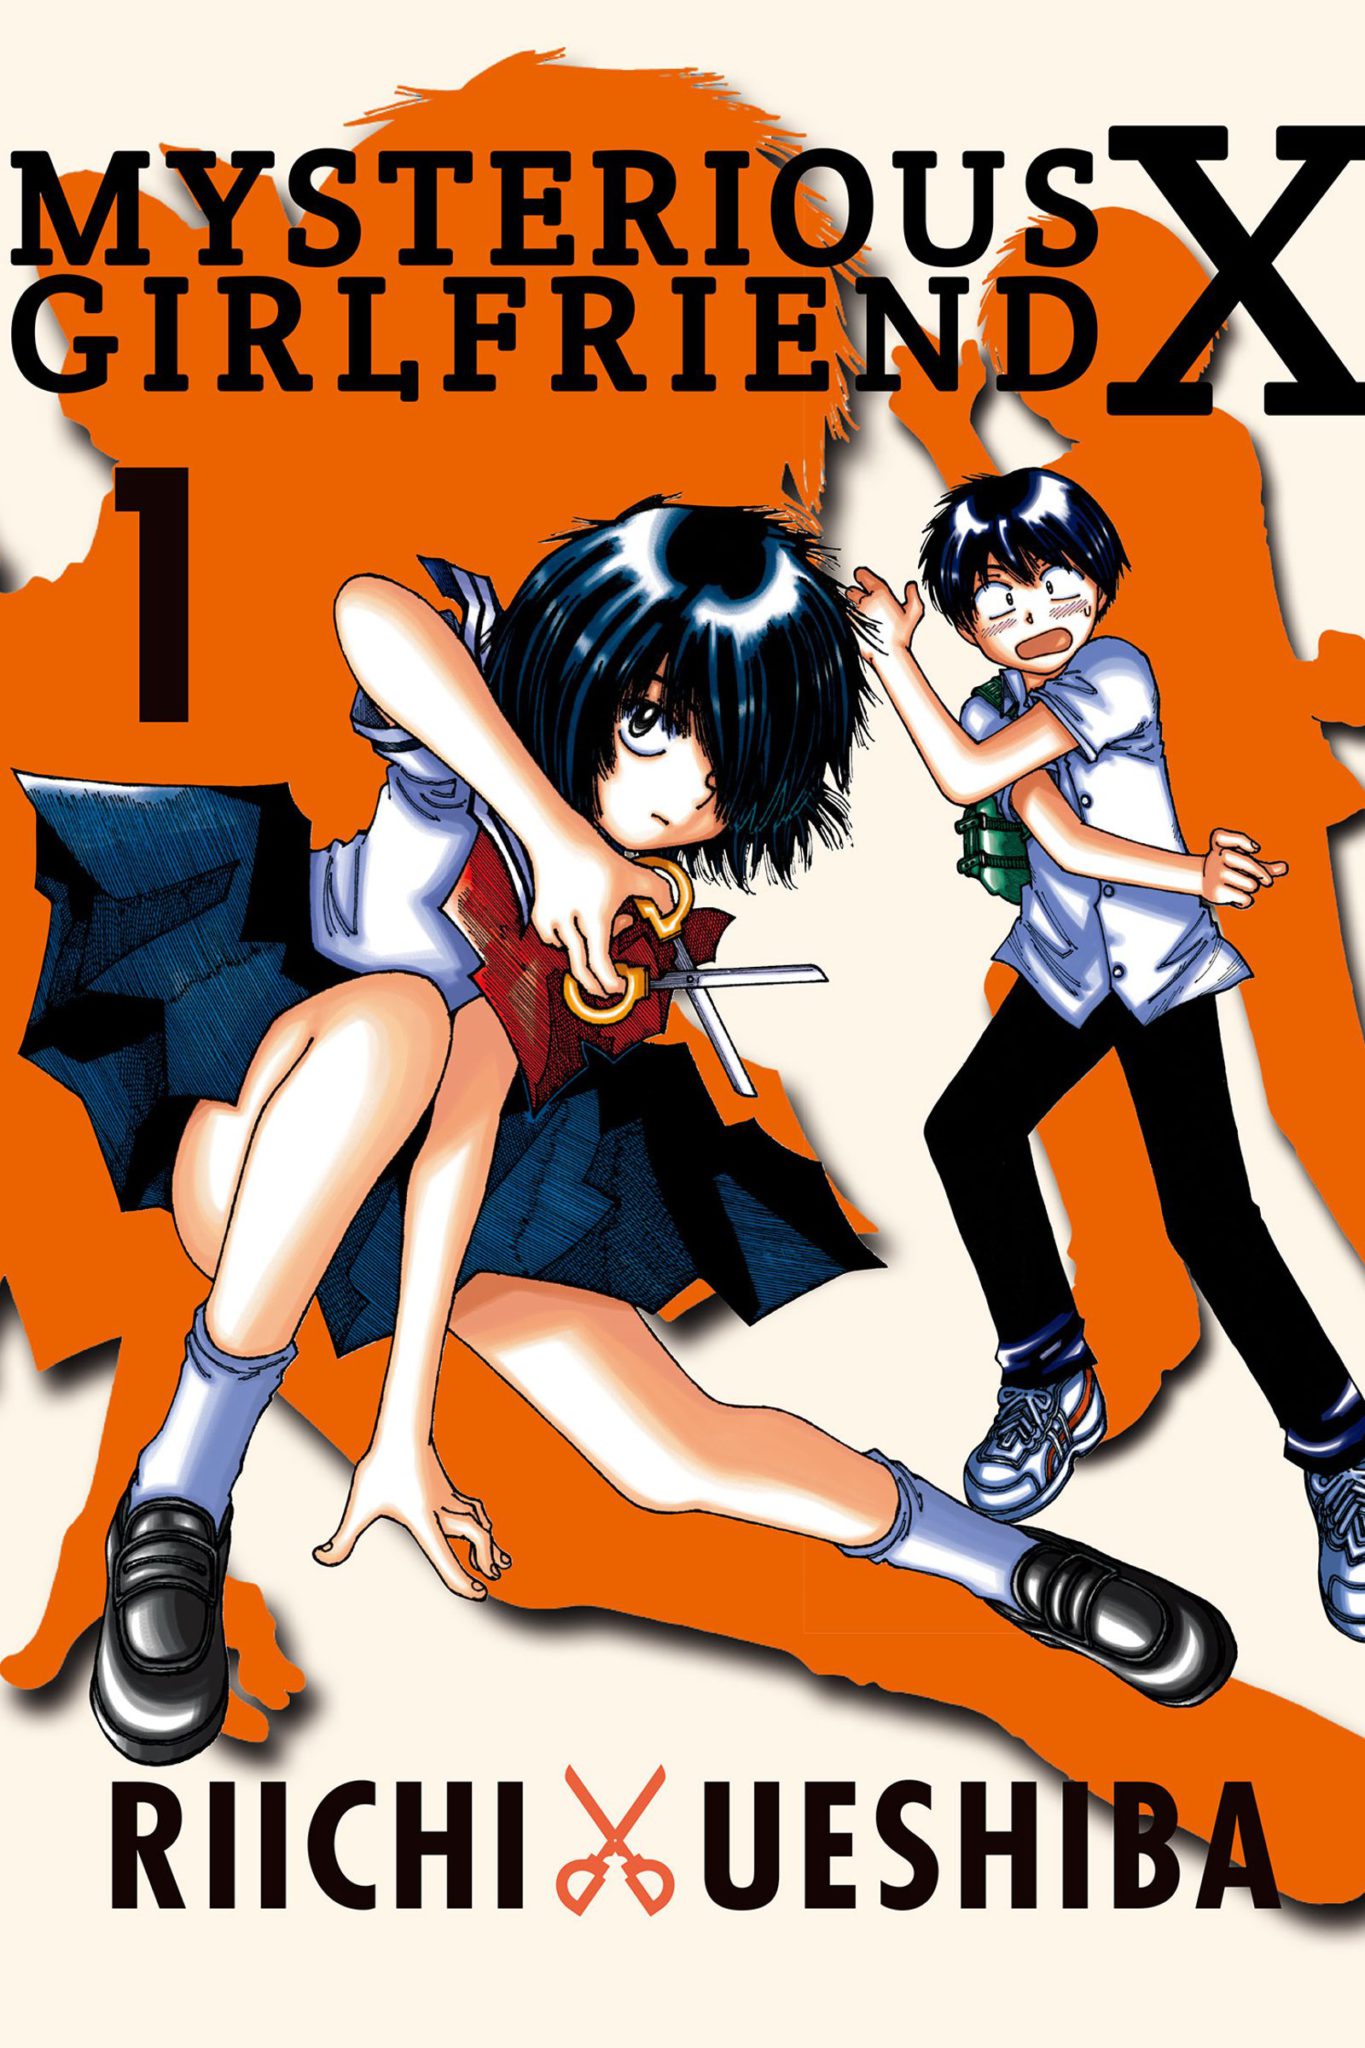 Mysterious Girlfriend X, mikoto Uchiha, Akita, meiko, soundCloud